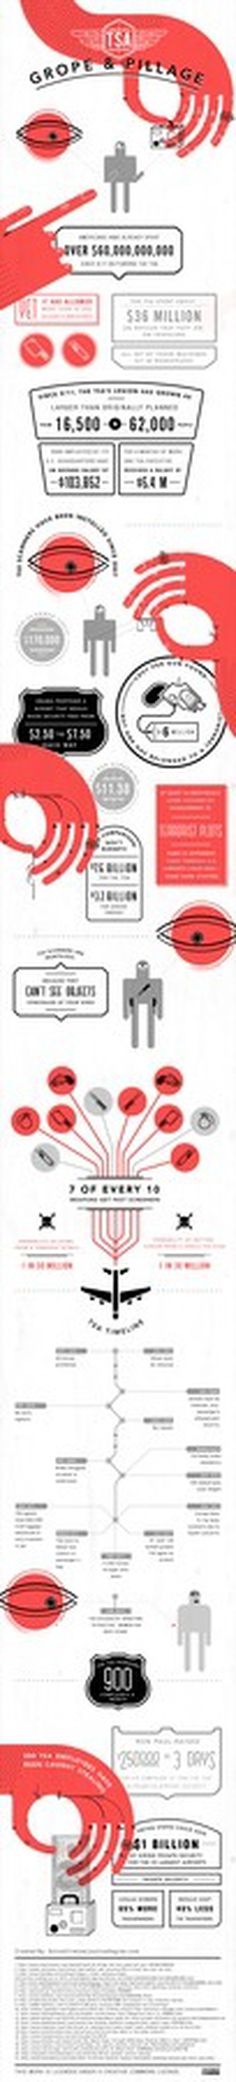 TSA Waste | OnlineCriminalJusticeDegree.com #infographic #illustration